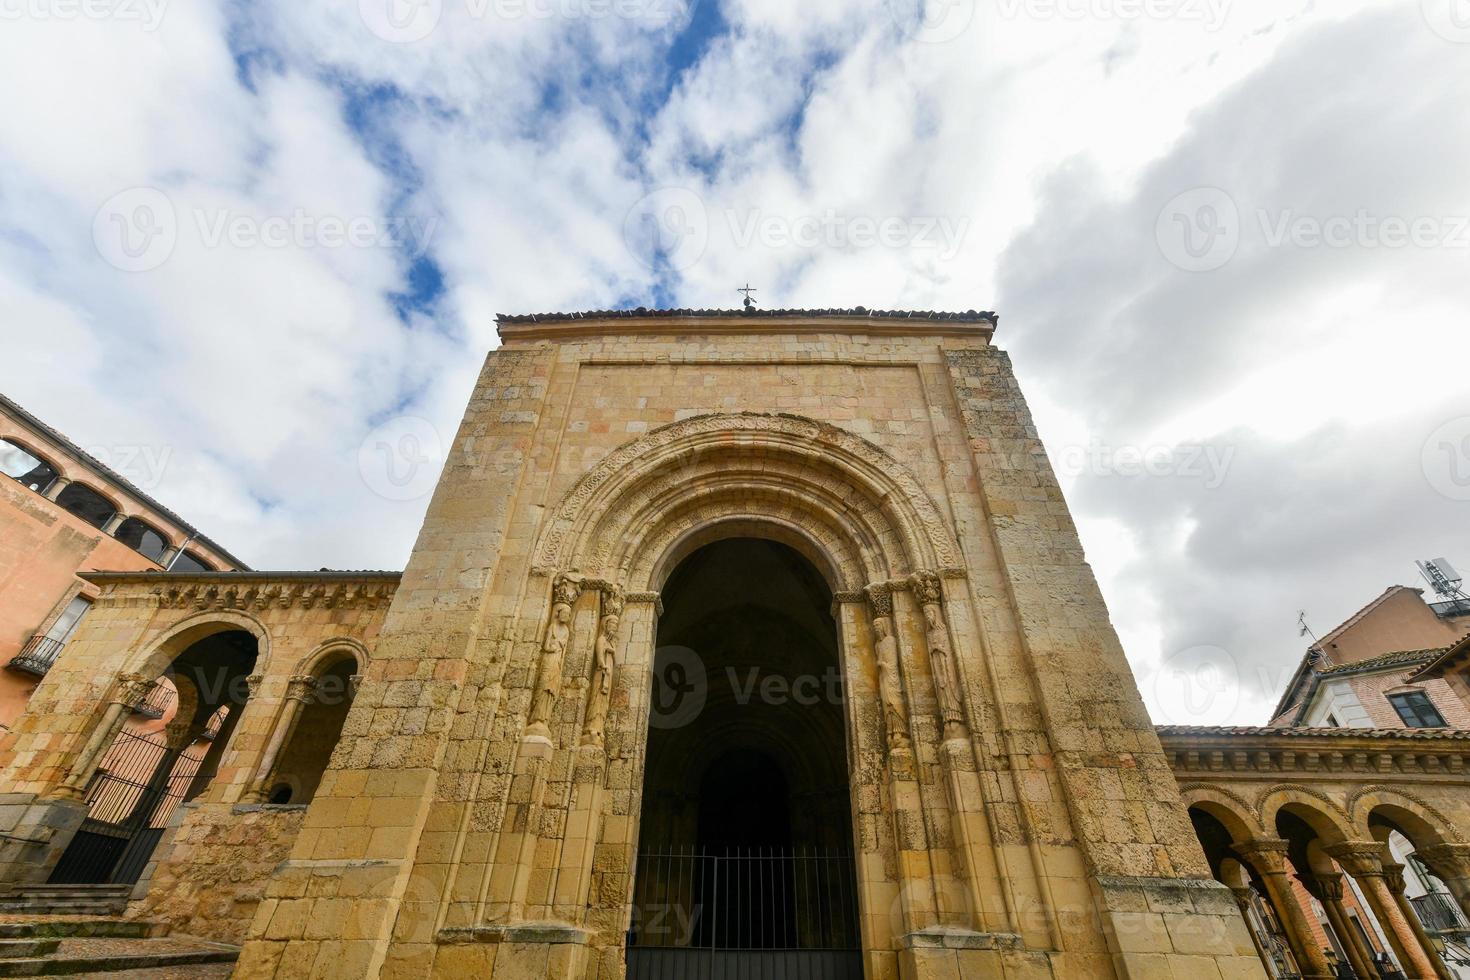 se av helgon Martin kyrka, iglesia de san martin, i segovia, Spanien foto